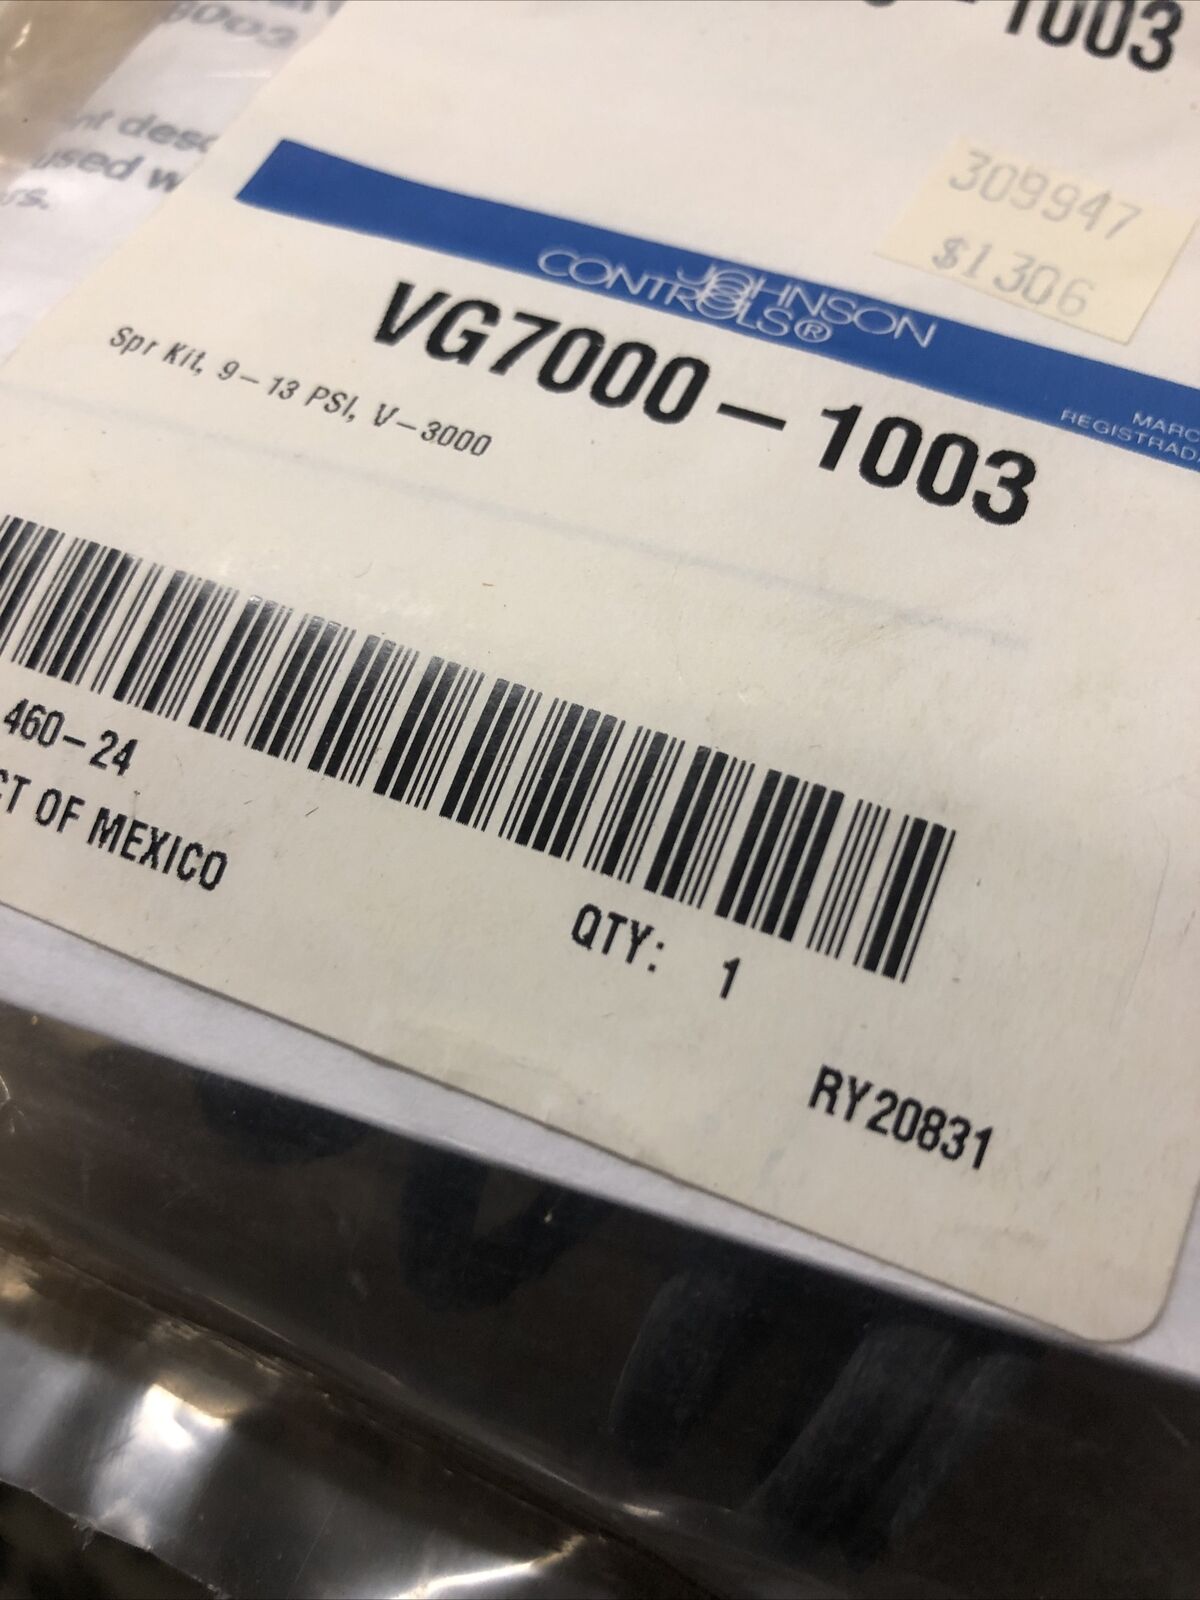 Johnson Controls VG7000-1003 Actuator Spring Kit 9-13psi, L38-321. New.